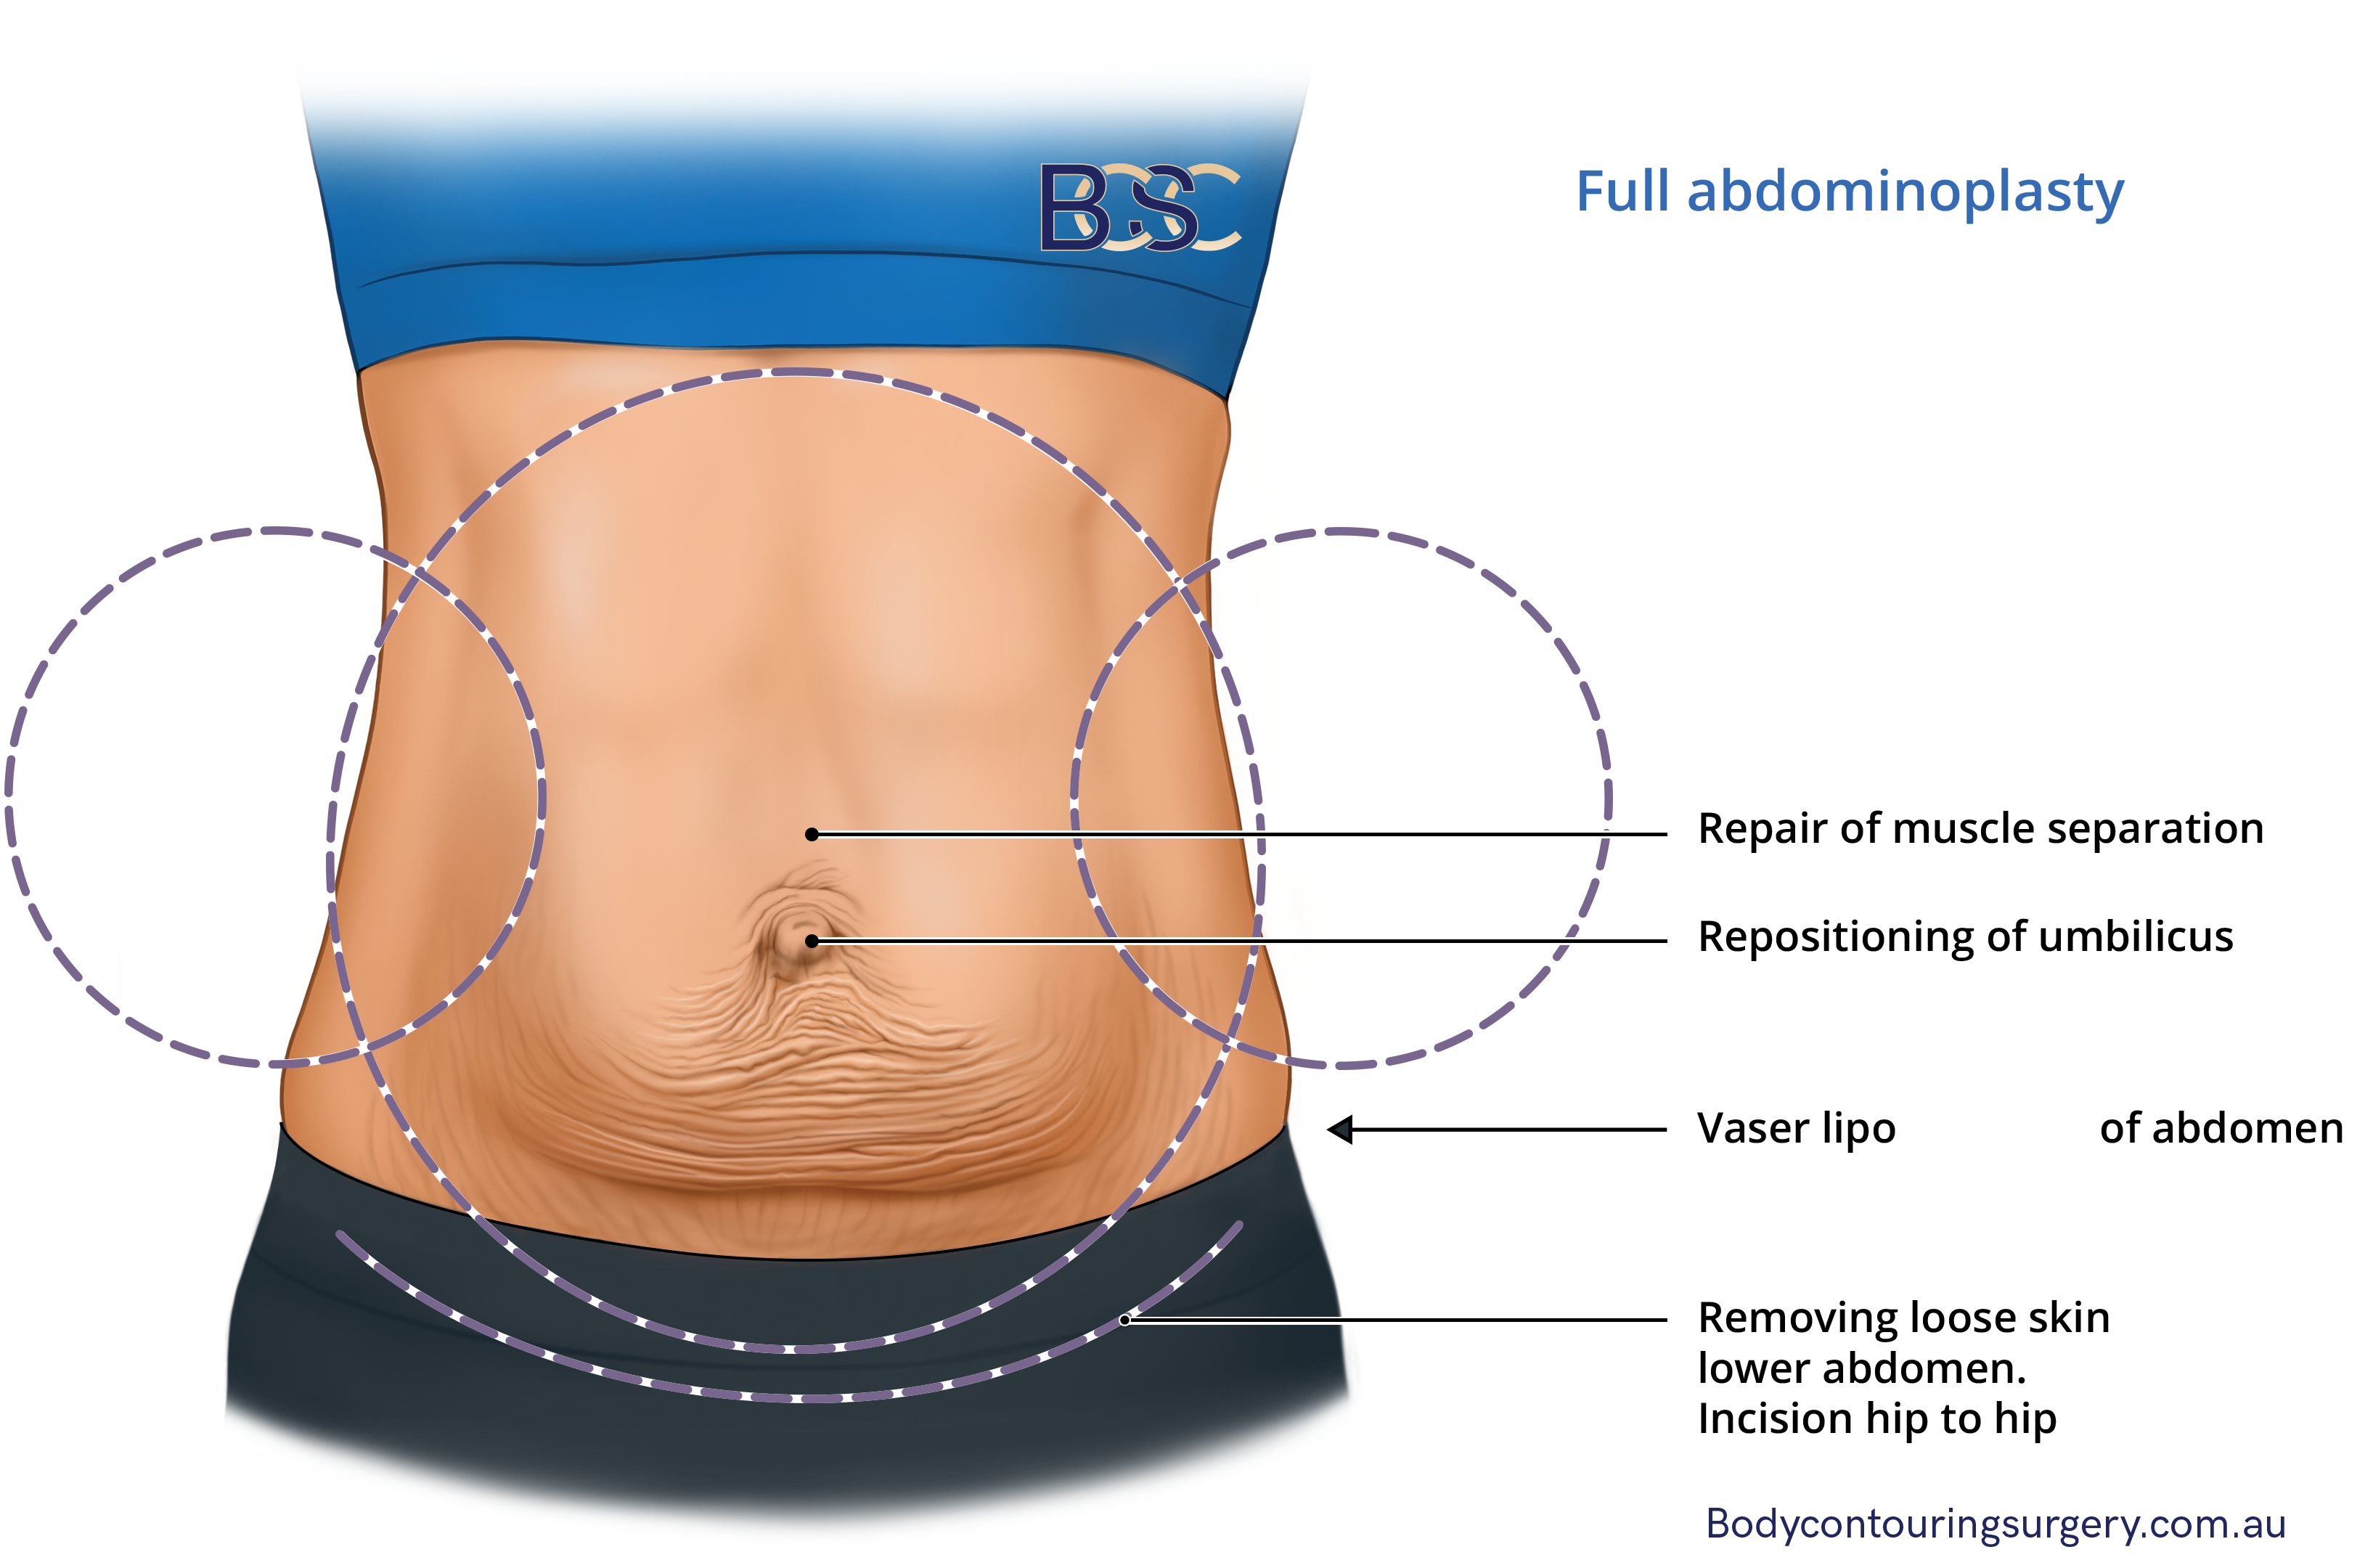 Full abdominoplasty or traditional abdominoplasty